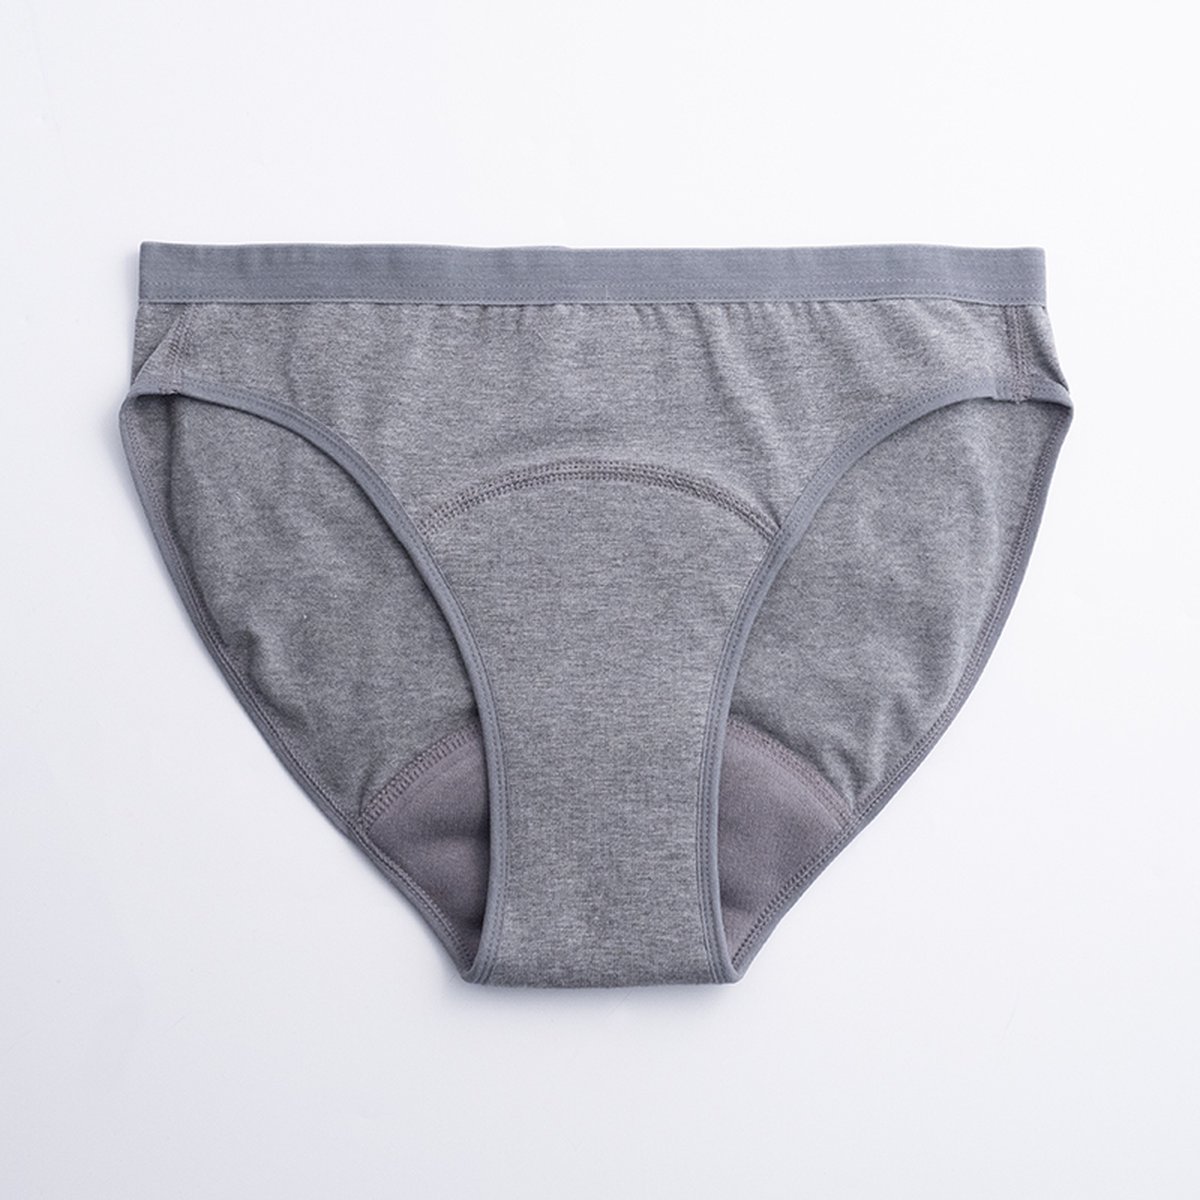 ImseVimse - Imse - menstruatieondergoed - Bikini model period underwear - matige menstruatie - L - eur 44/46 - grijs